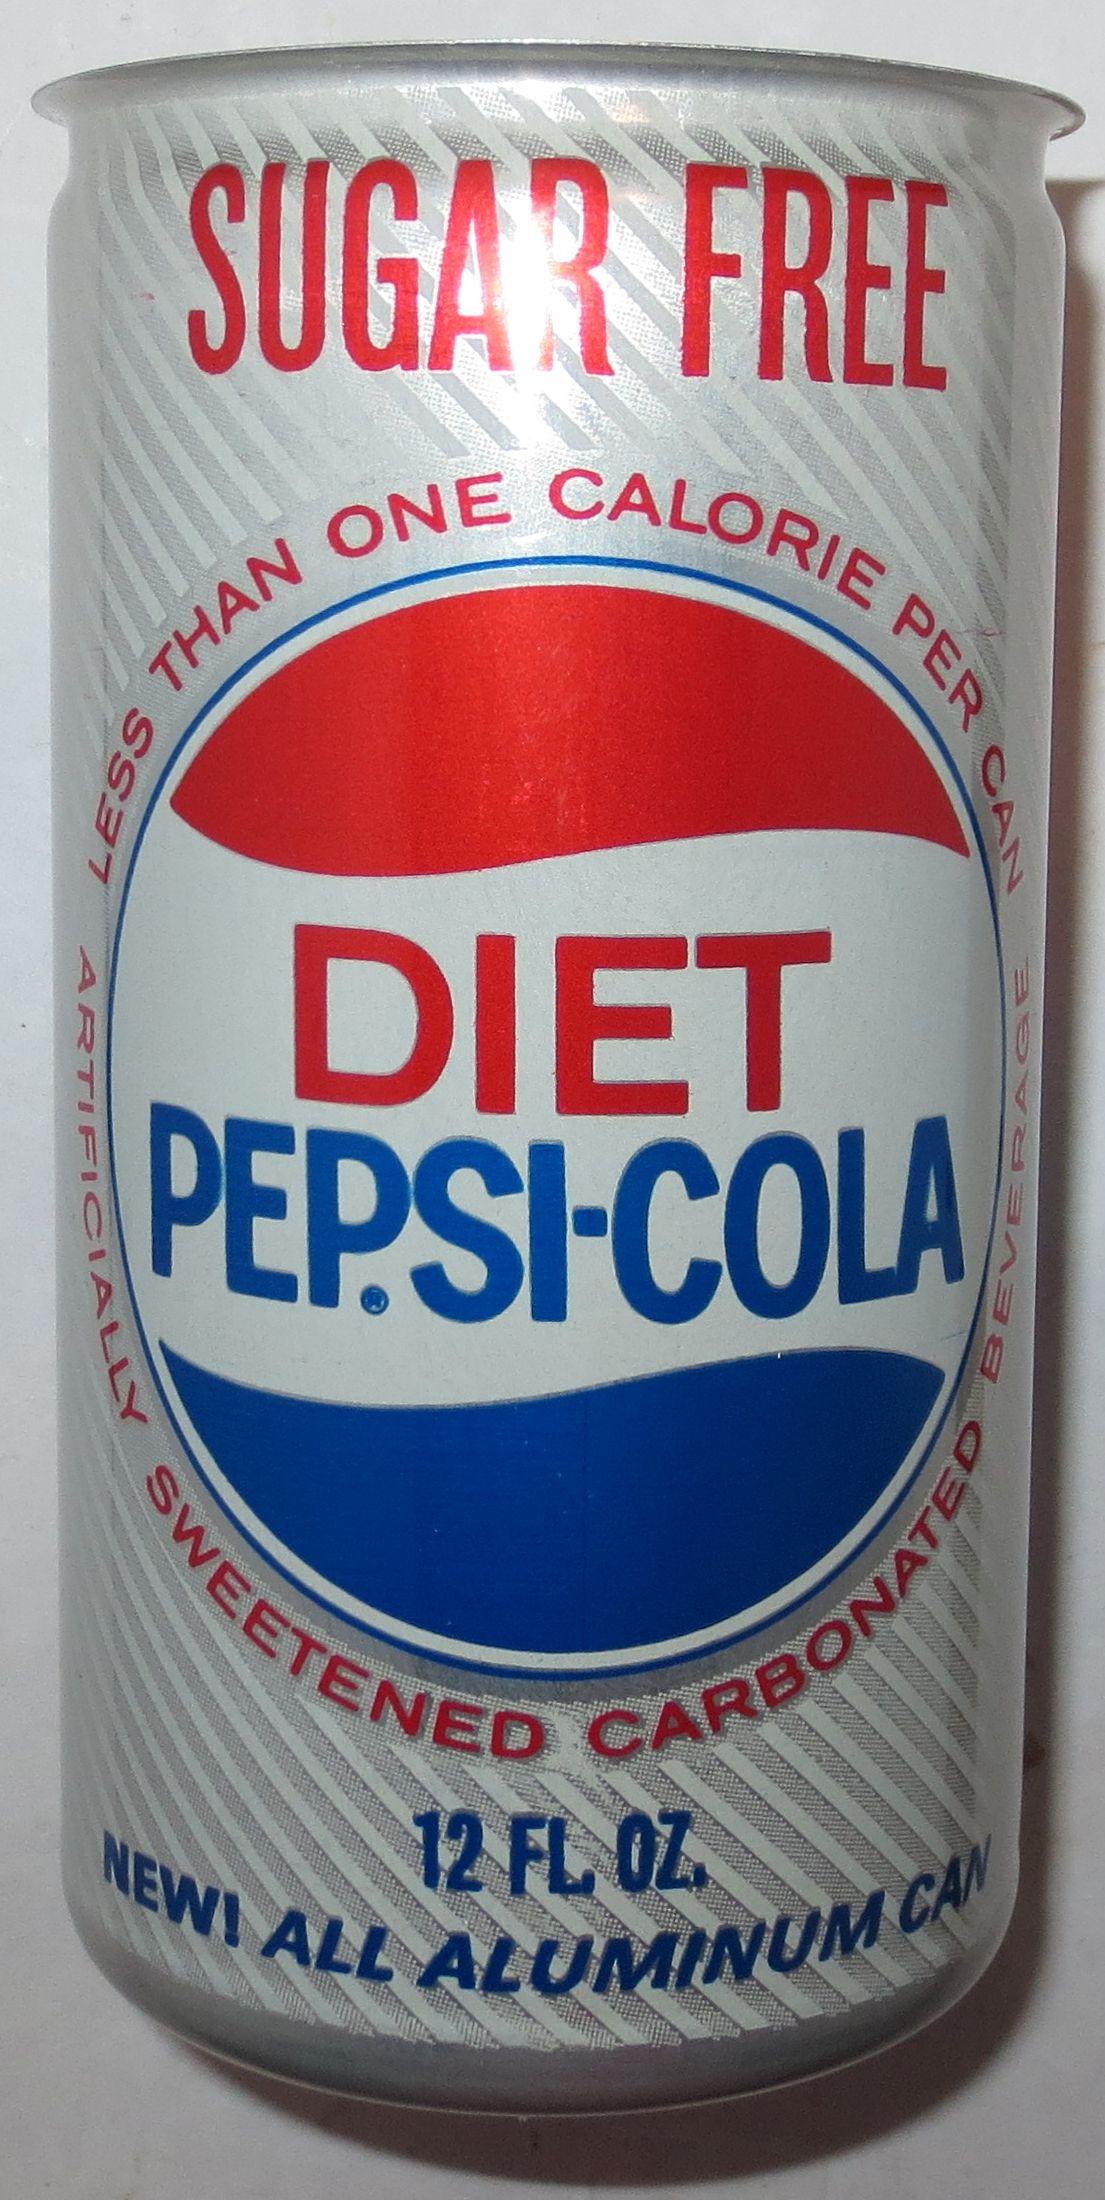 Diet Pepsi Logo - Diet Pepsi | Logopedia | FANDOM powered by Wikia